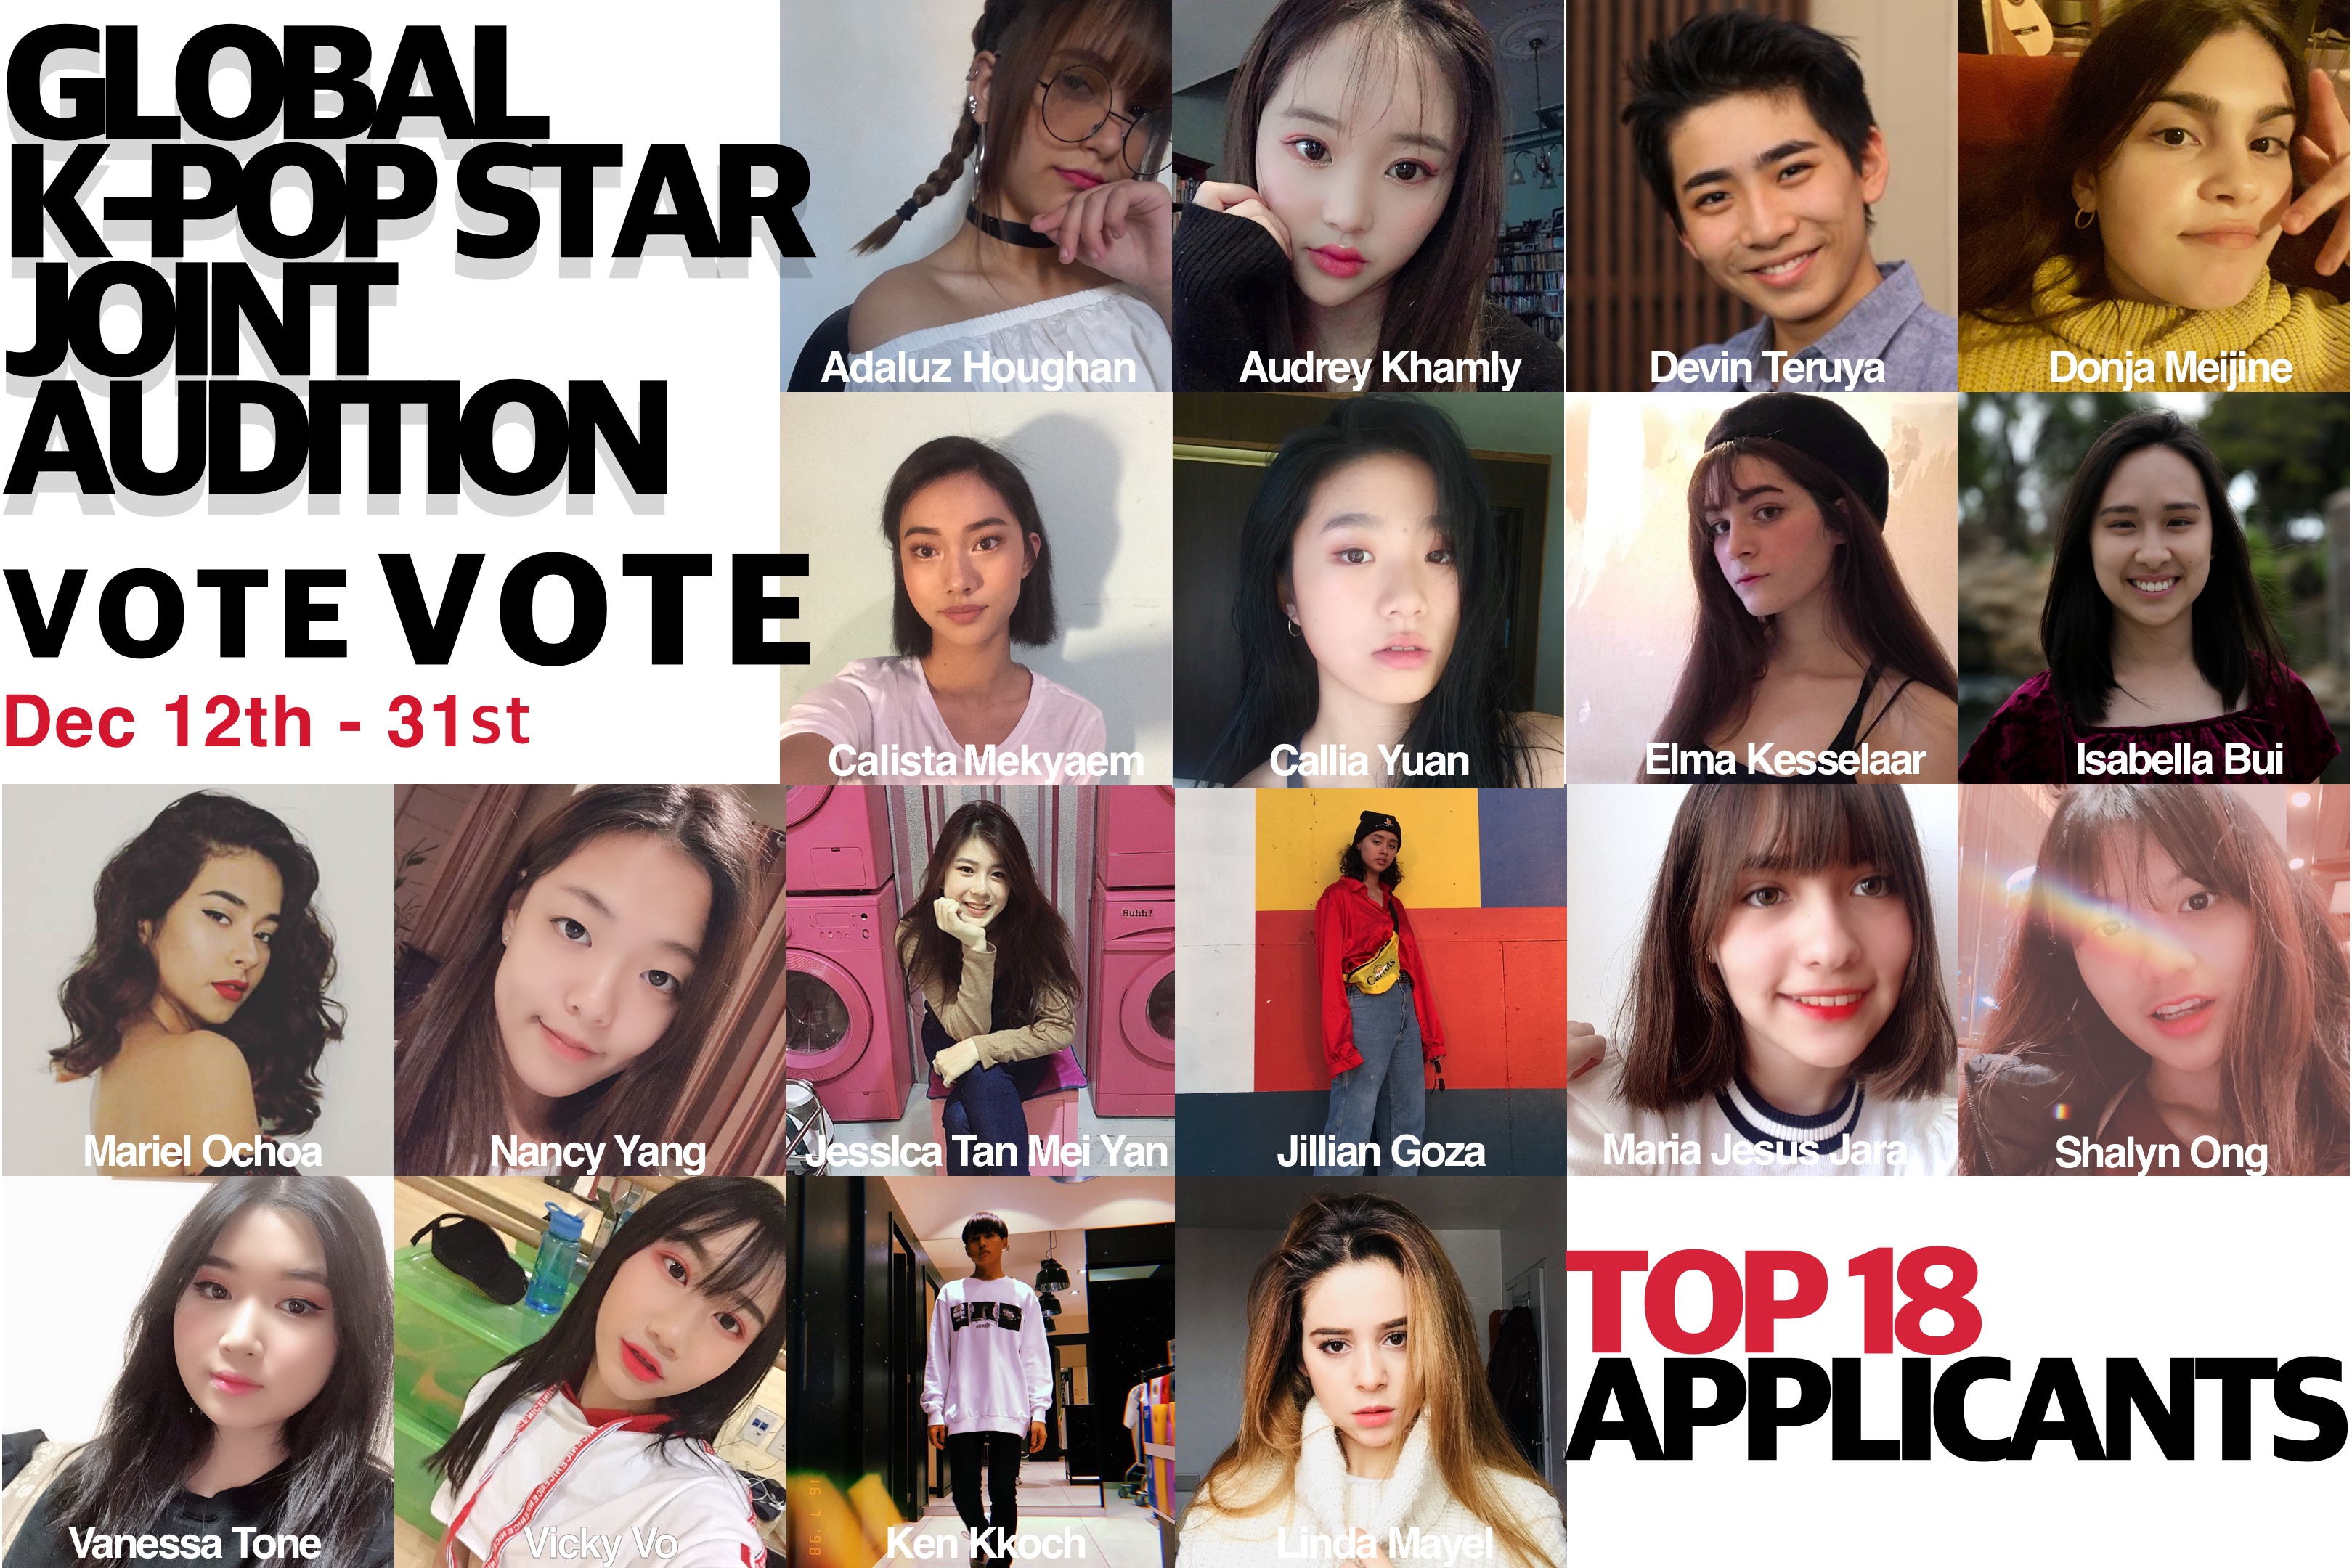 Global KPOP Star joint Audition fan vote has begun